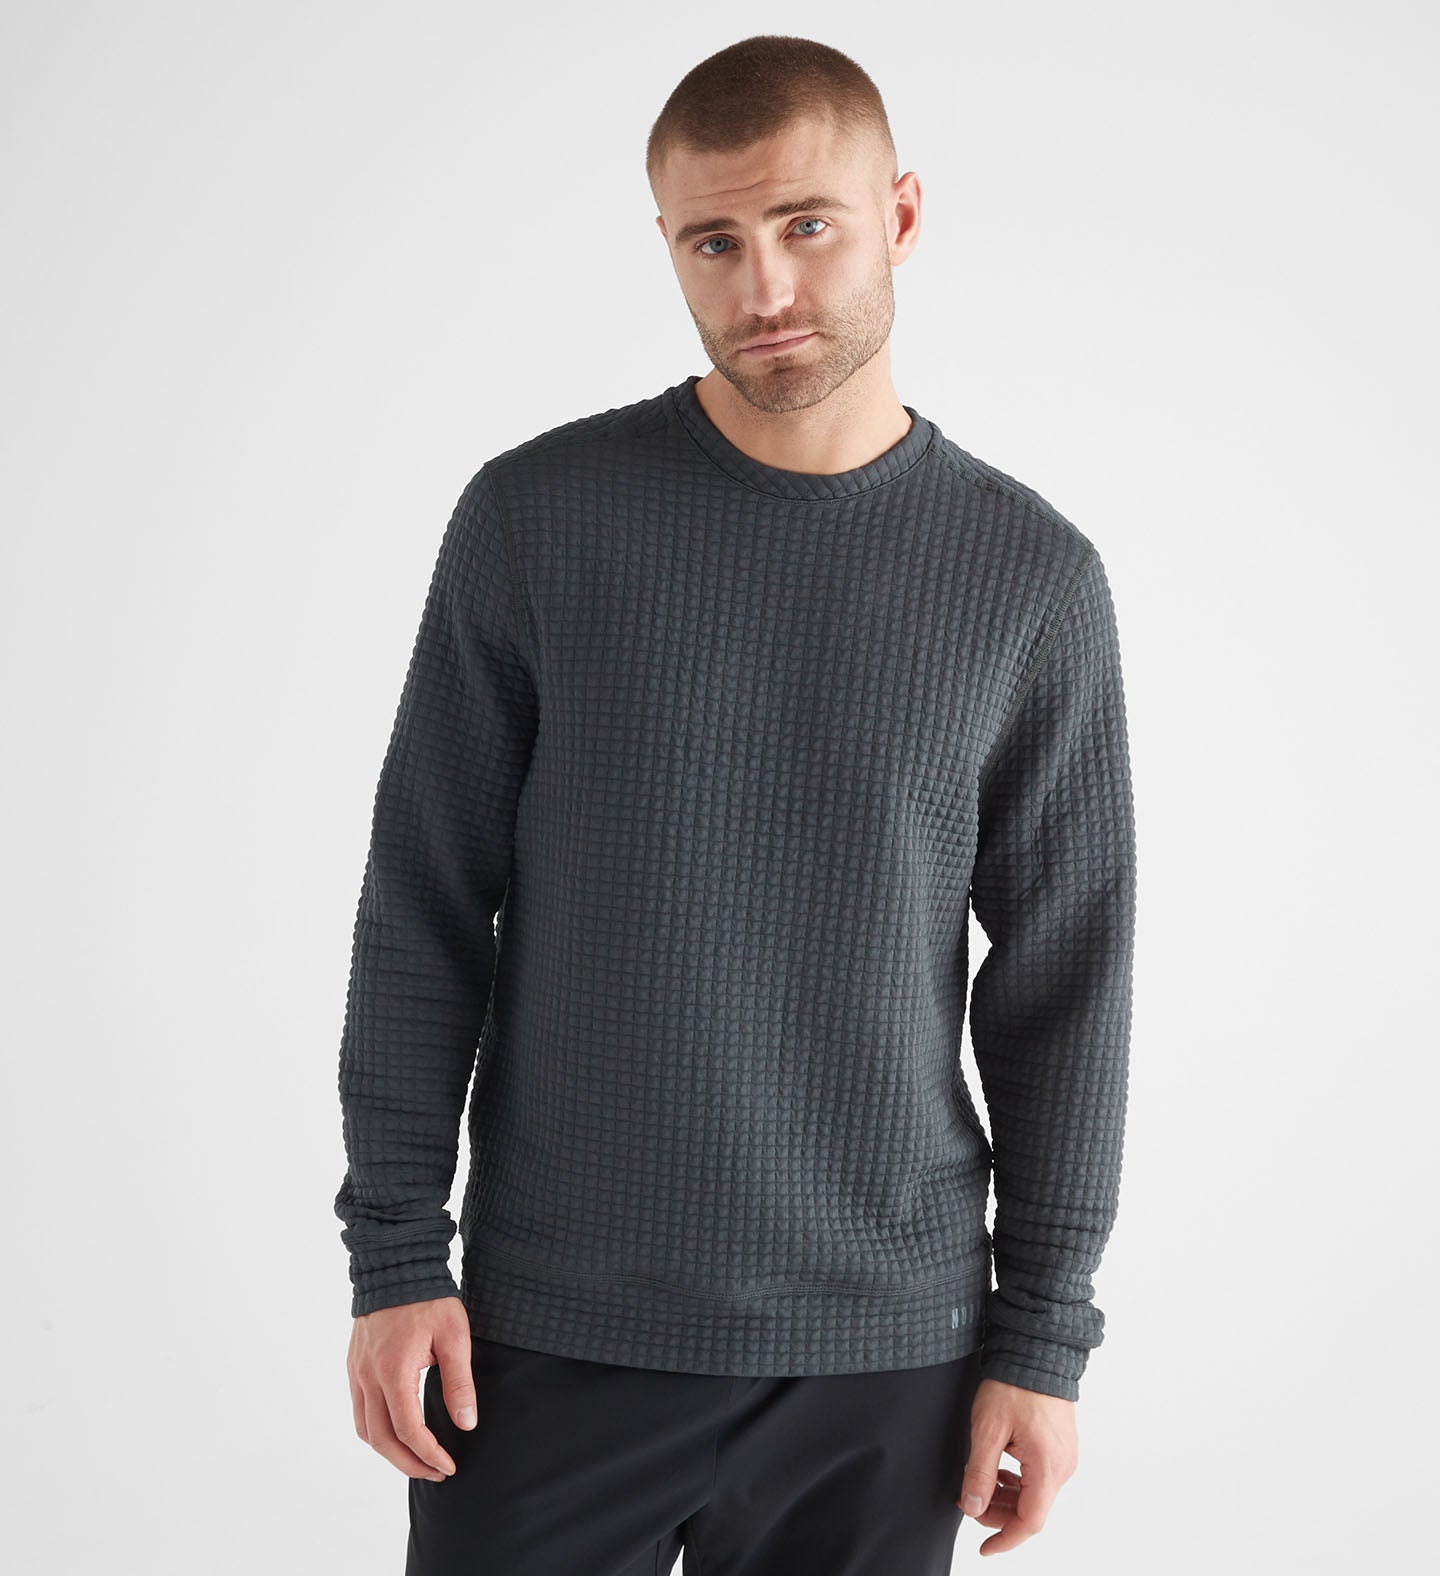 LULULEMON $98.00 The Sweater The Better Dark Grey Knit Pullover